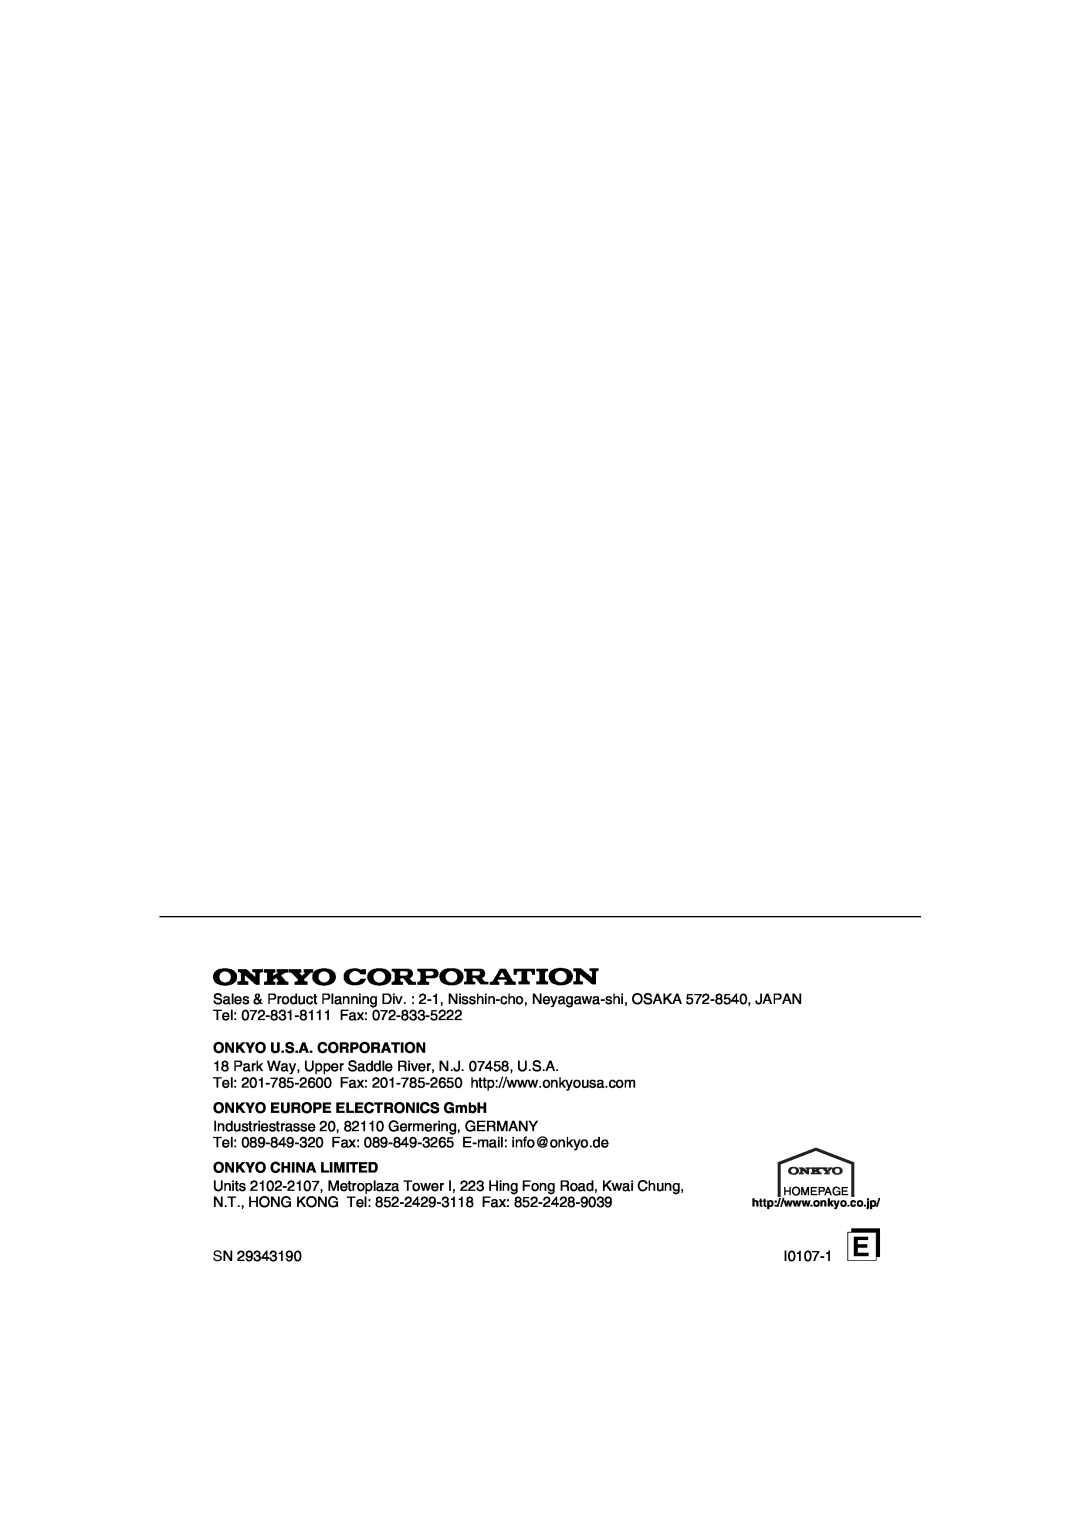 Onkyo C-701A instruction manual Onkyo U.S.A. Corporation, ONKYO EUROPE ELECTRONICS GmbH, Onkyo China Limited 